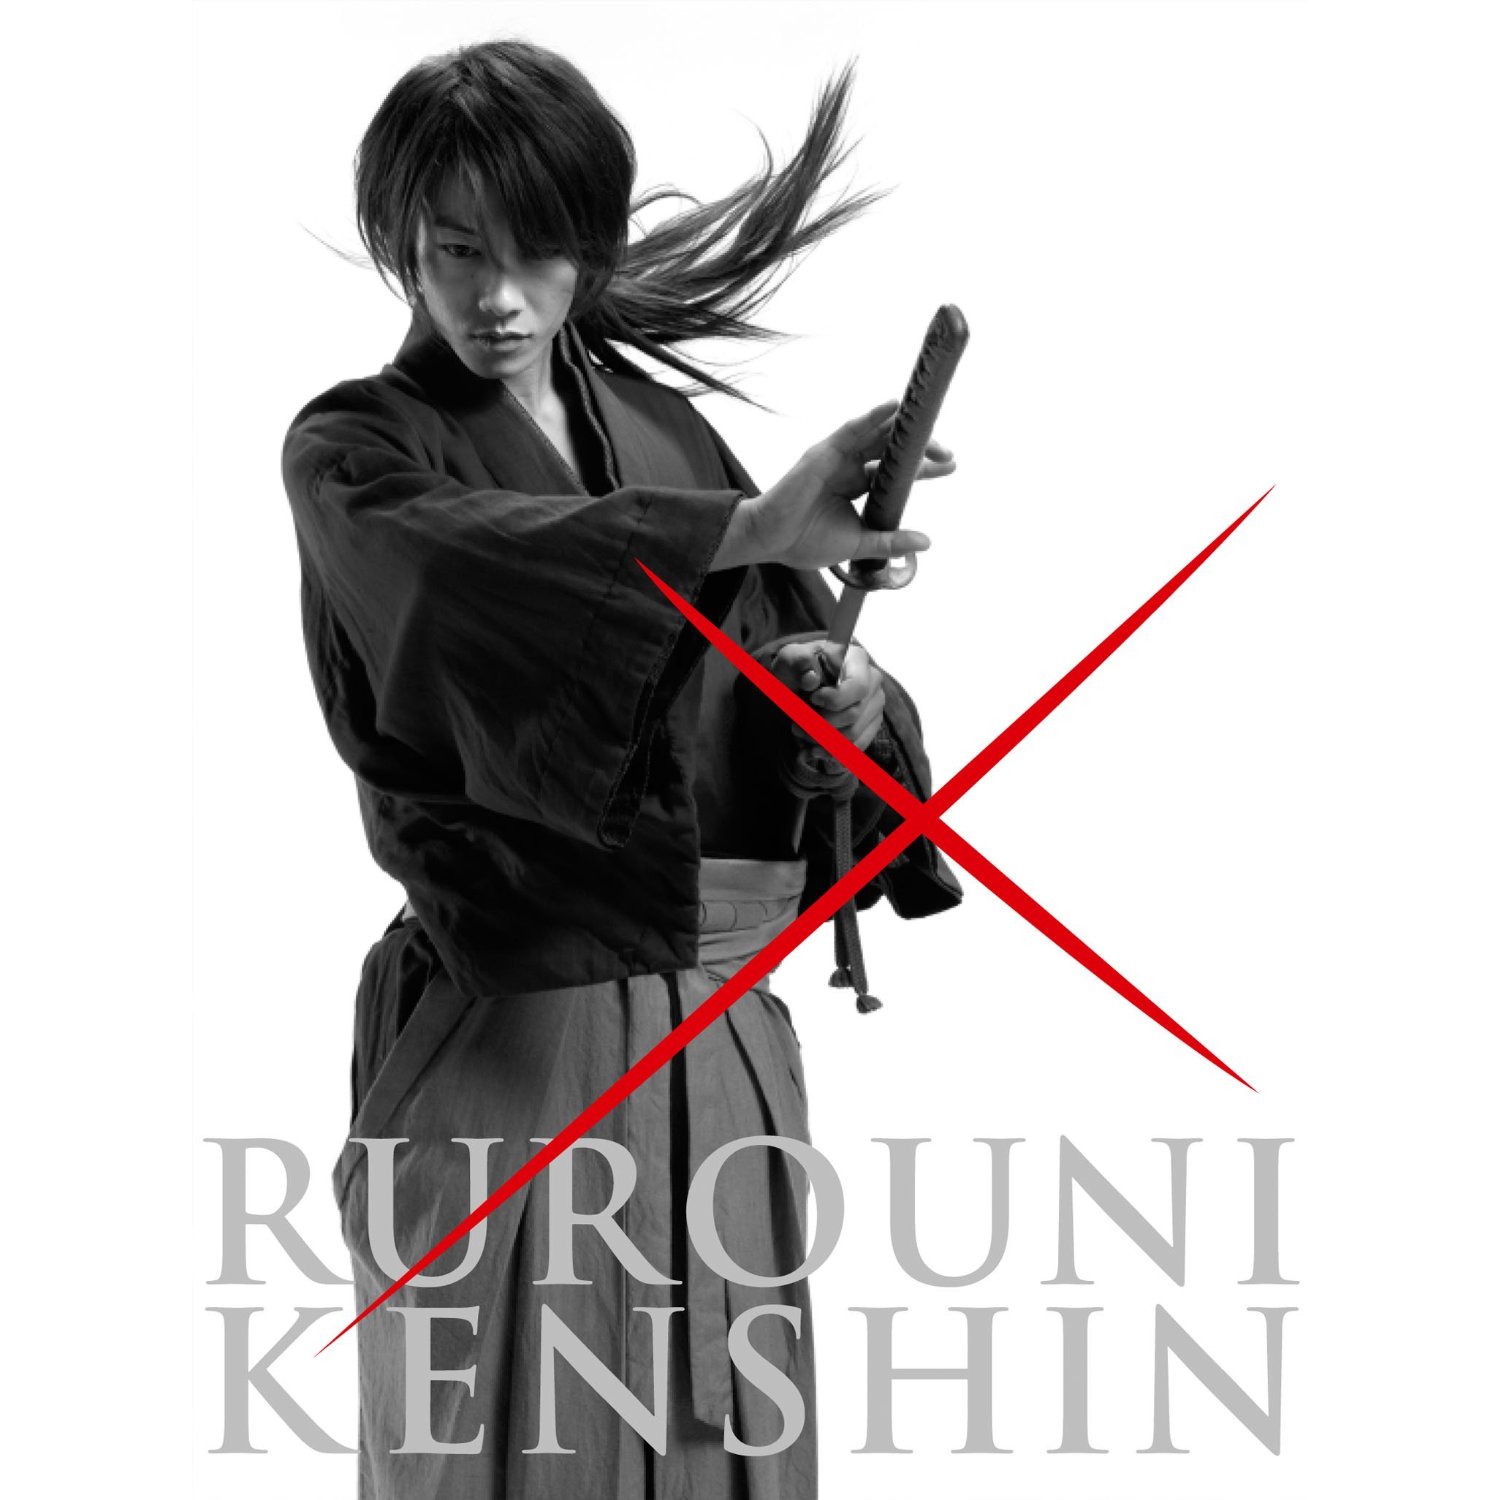 Rurouni Kenshin Backgrounds on Wallpapers Vista